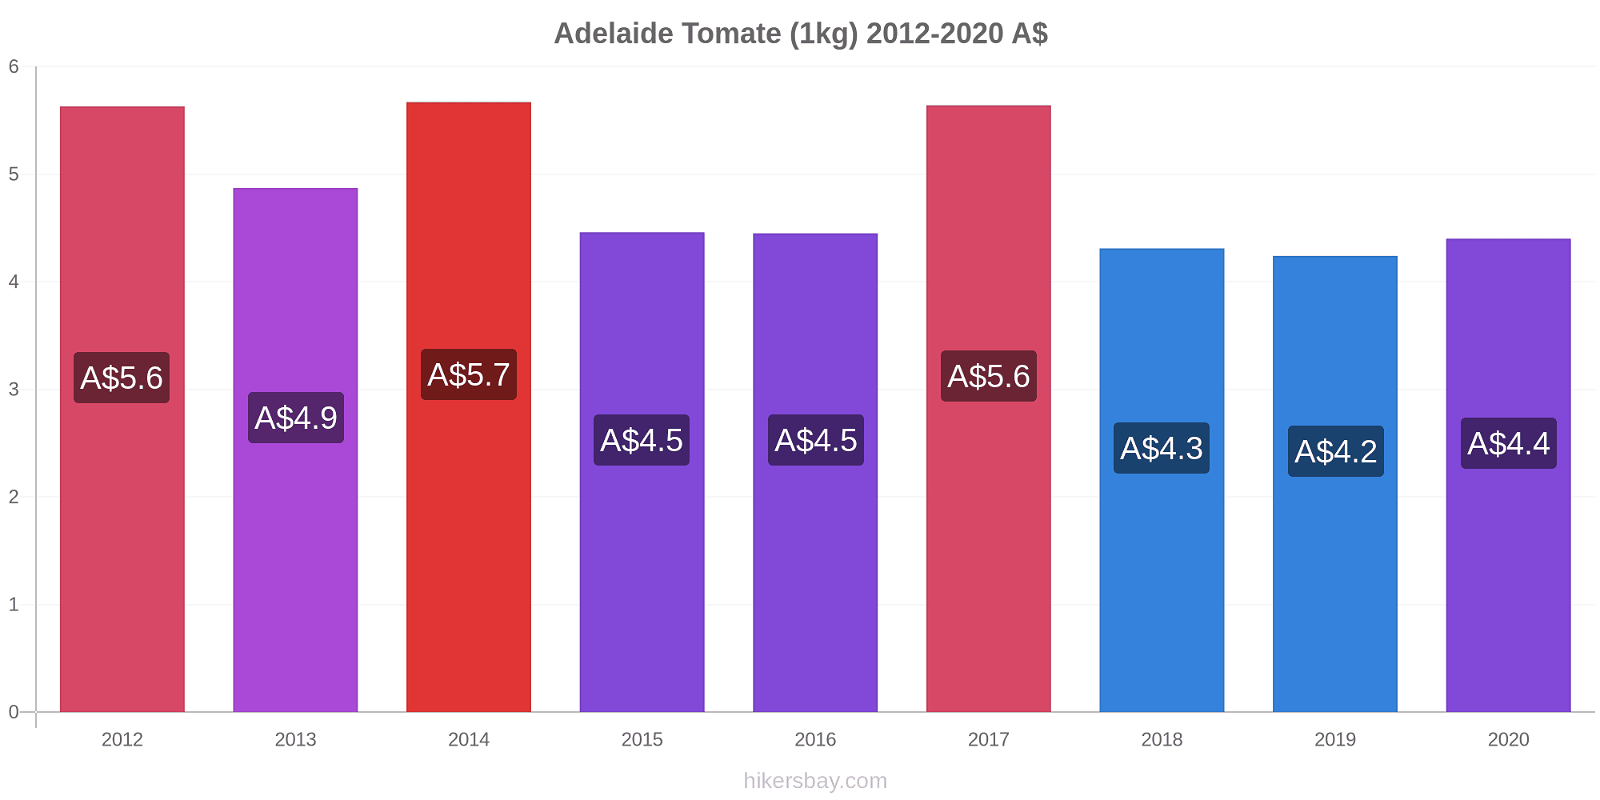 Adelaide modificări de preț Tomate (1kg) hikersbay.com